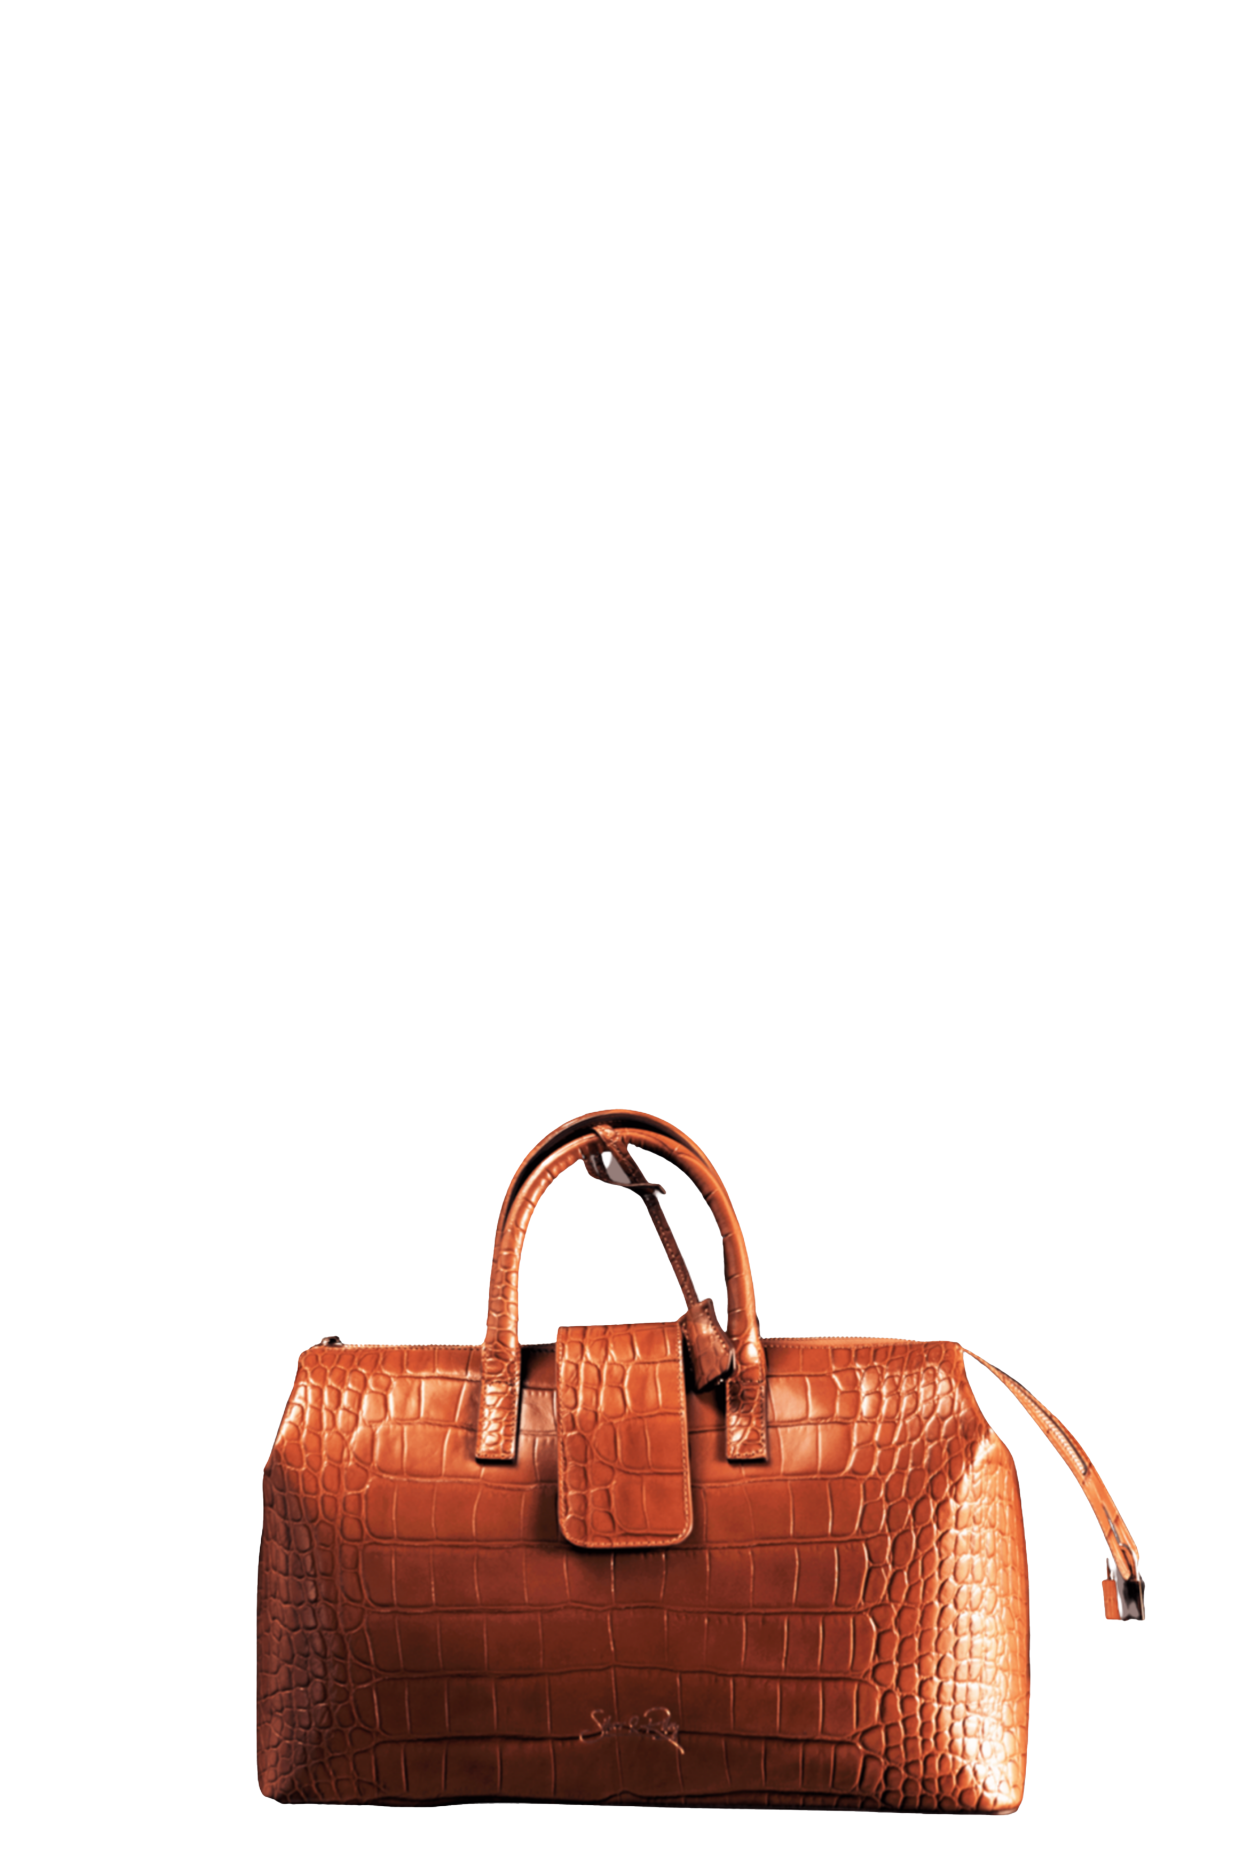 Trendy Crocodile Pattern Handbag, Fashion Faux Leather Shoulder